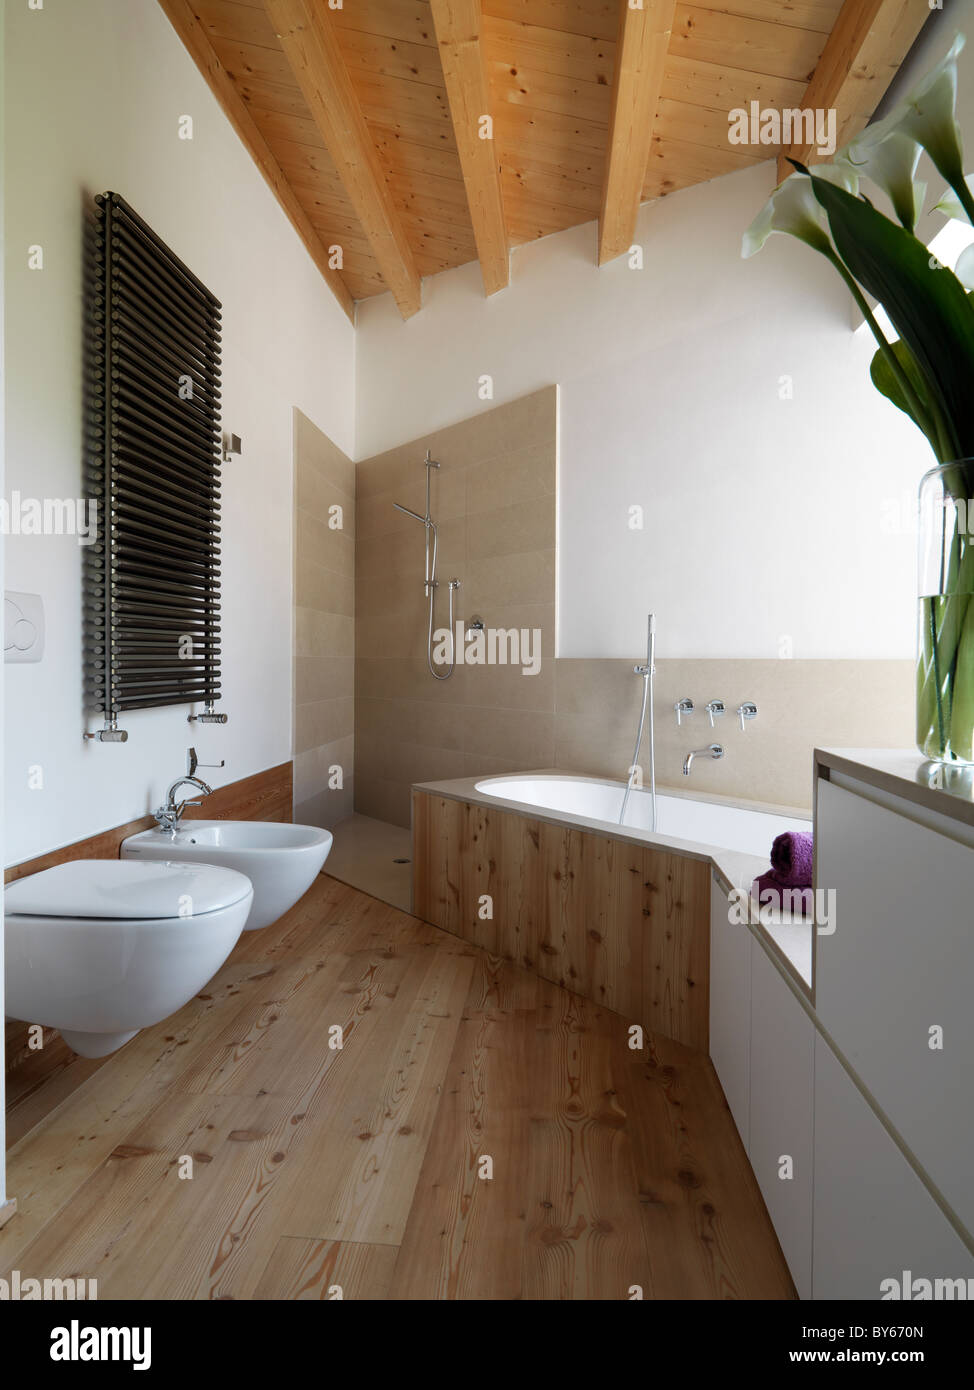 modern bathroom with a wooden floor and bathtub Stock Photo